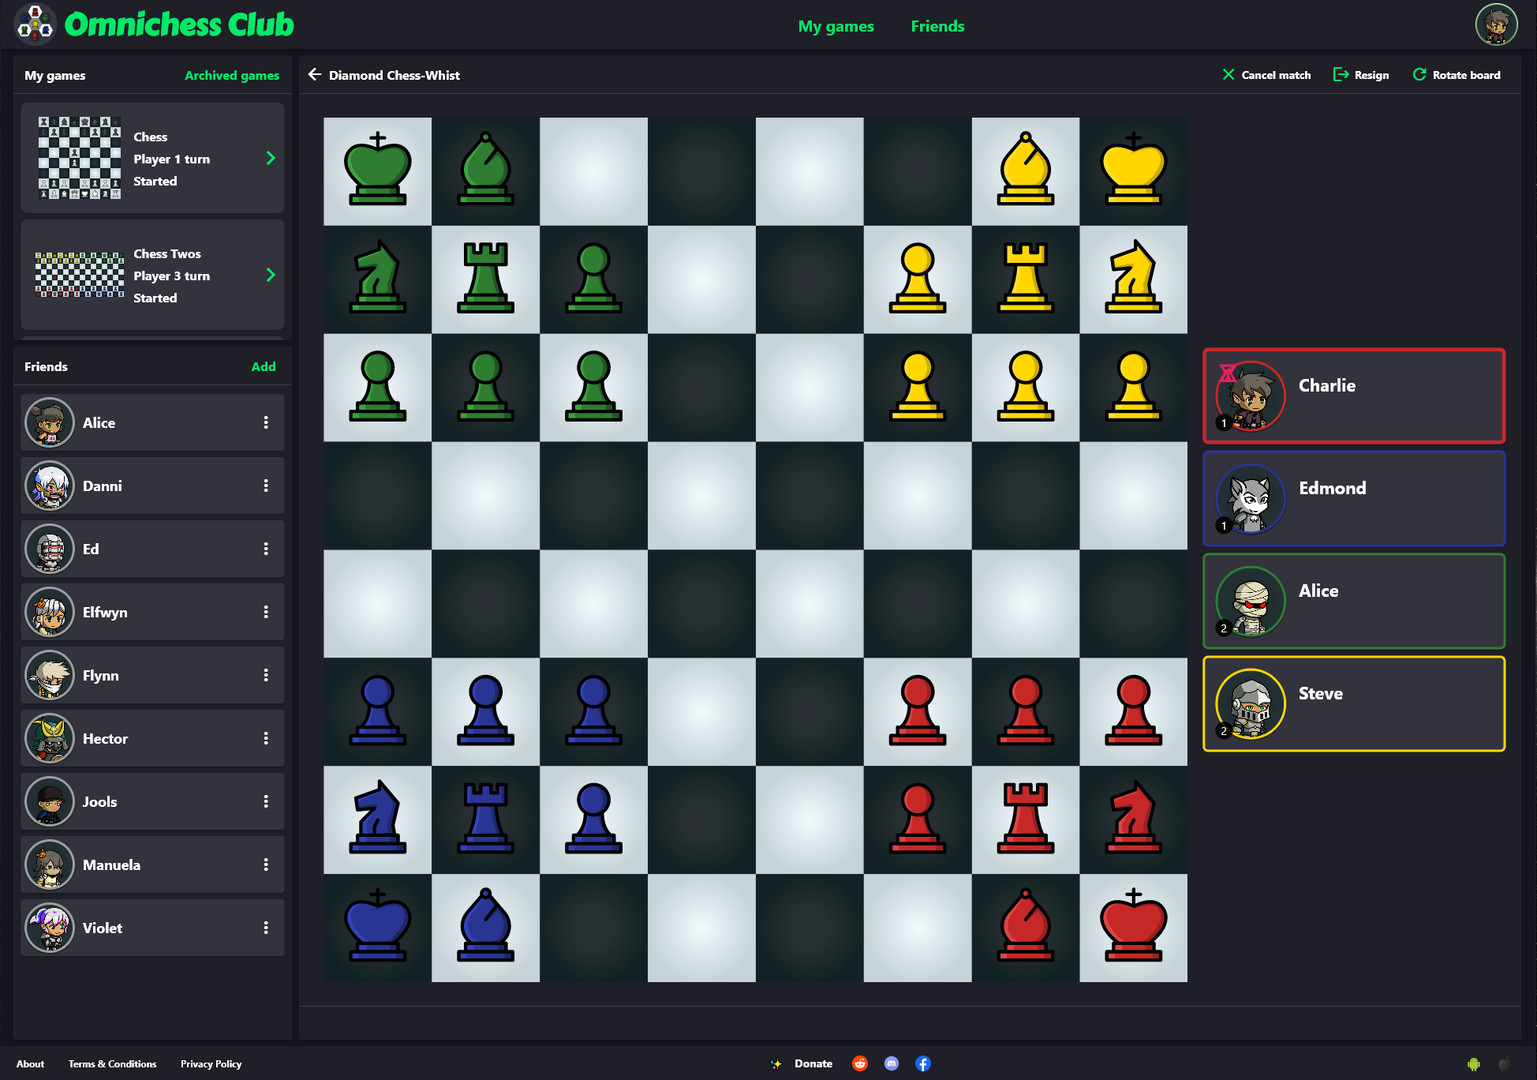 The Chess Variants Club no Steam